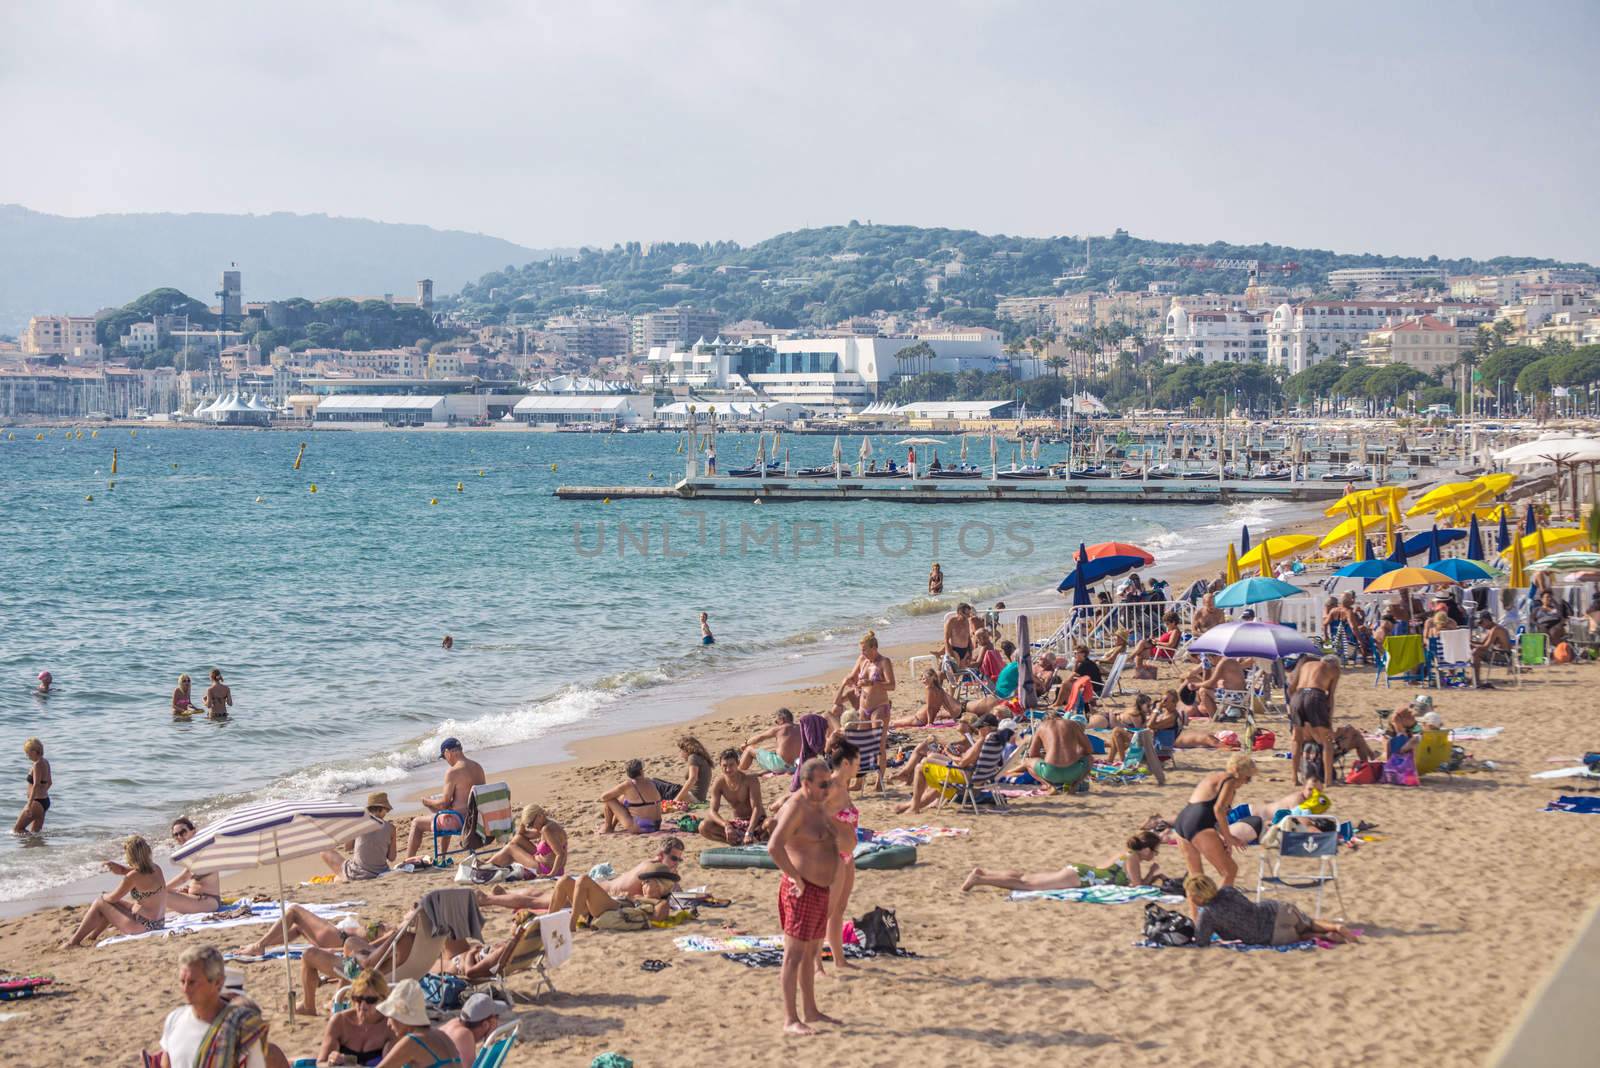 Cannes coast by Alenmax